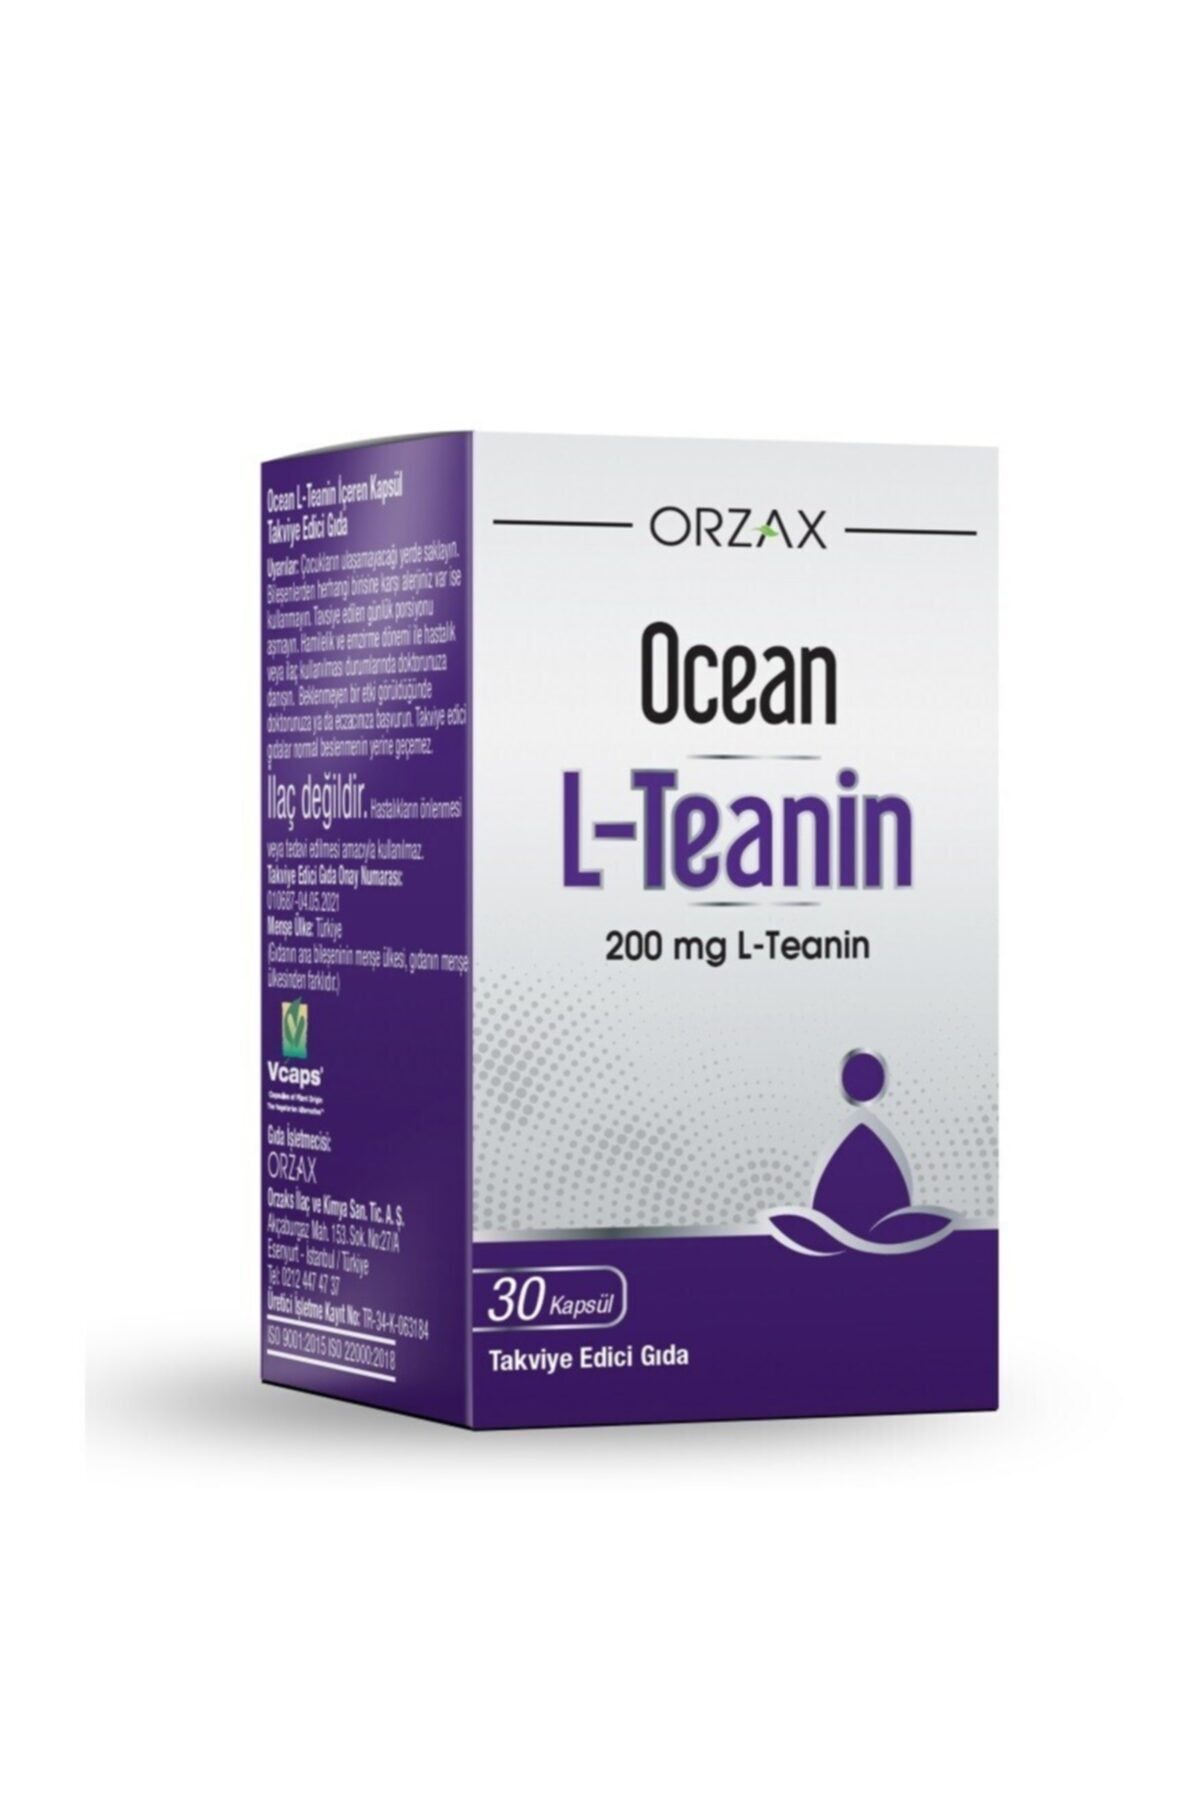 Ocean Ocean L-teanin ( 200 Mg L-theainine) 30 Kapsül